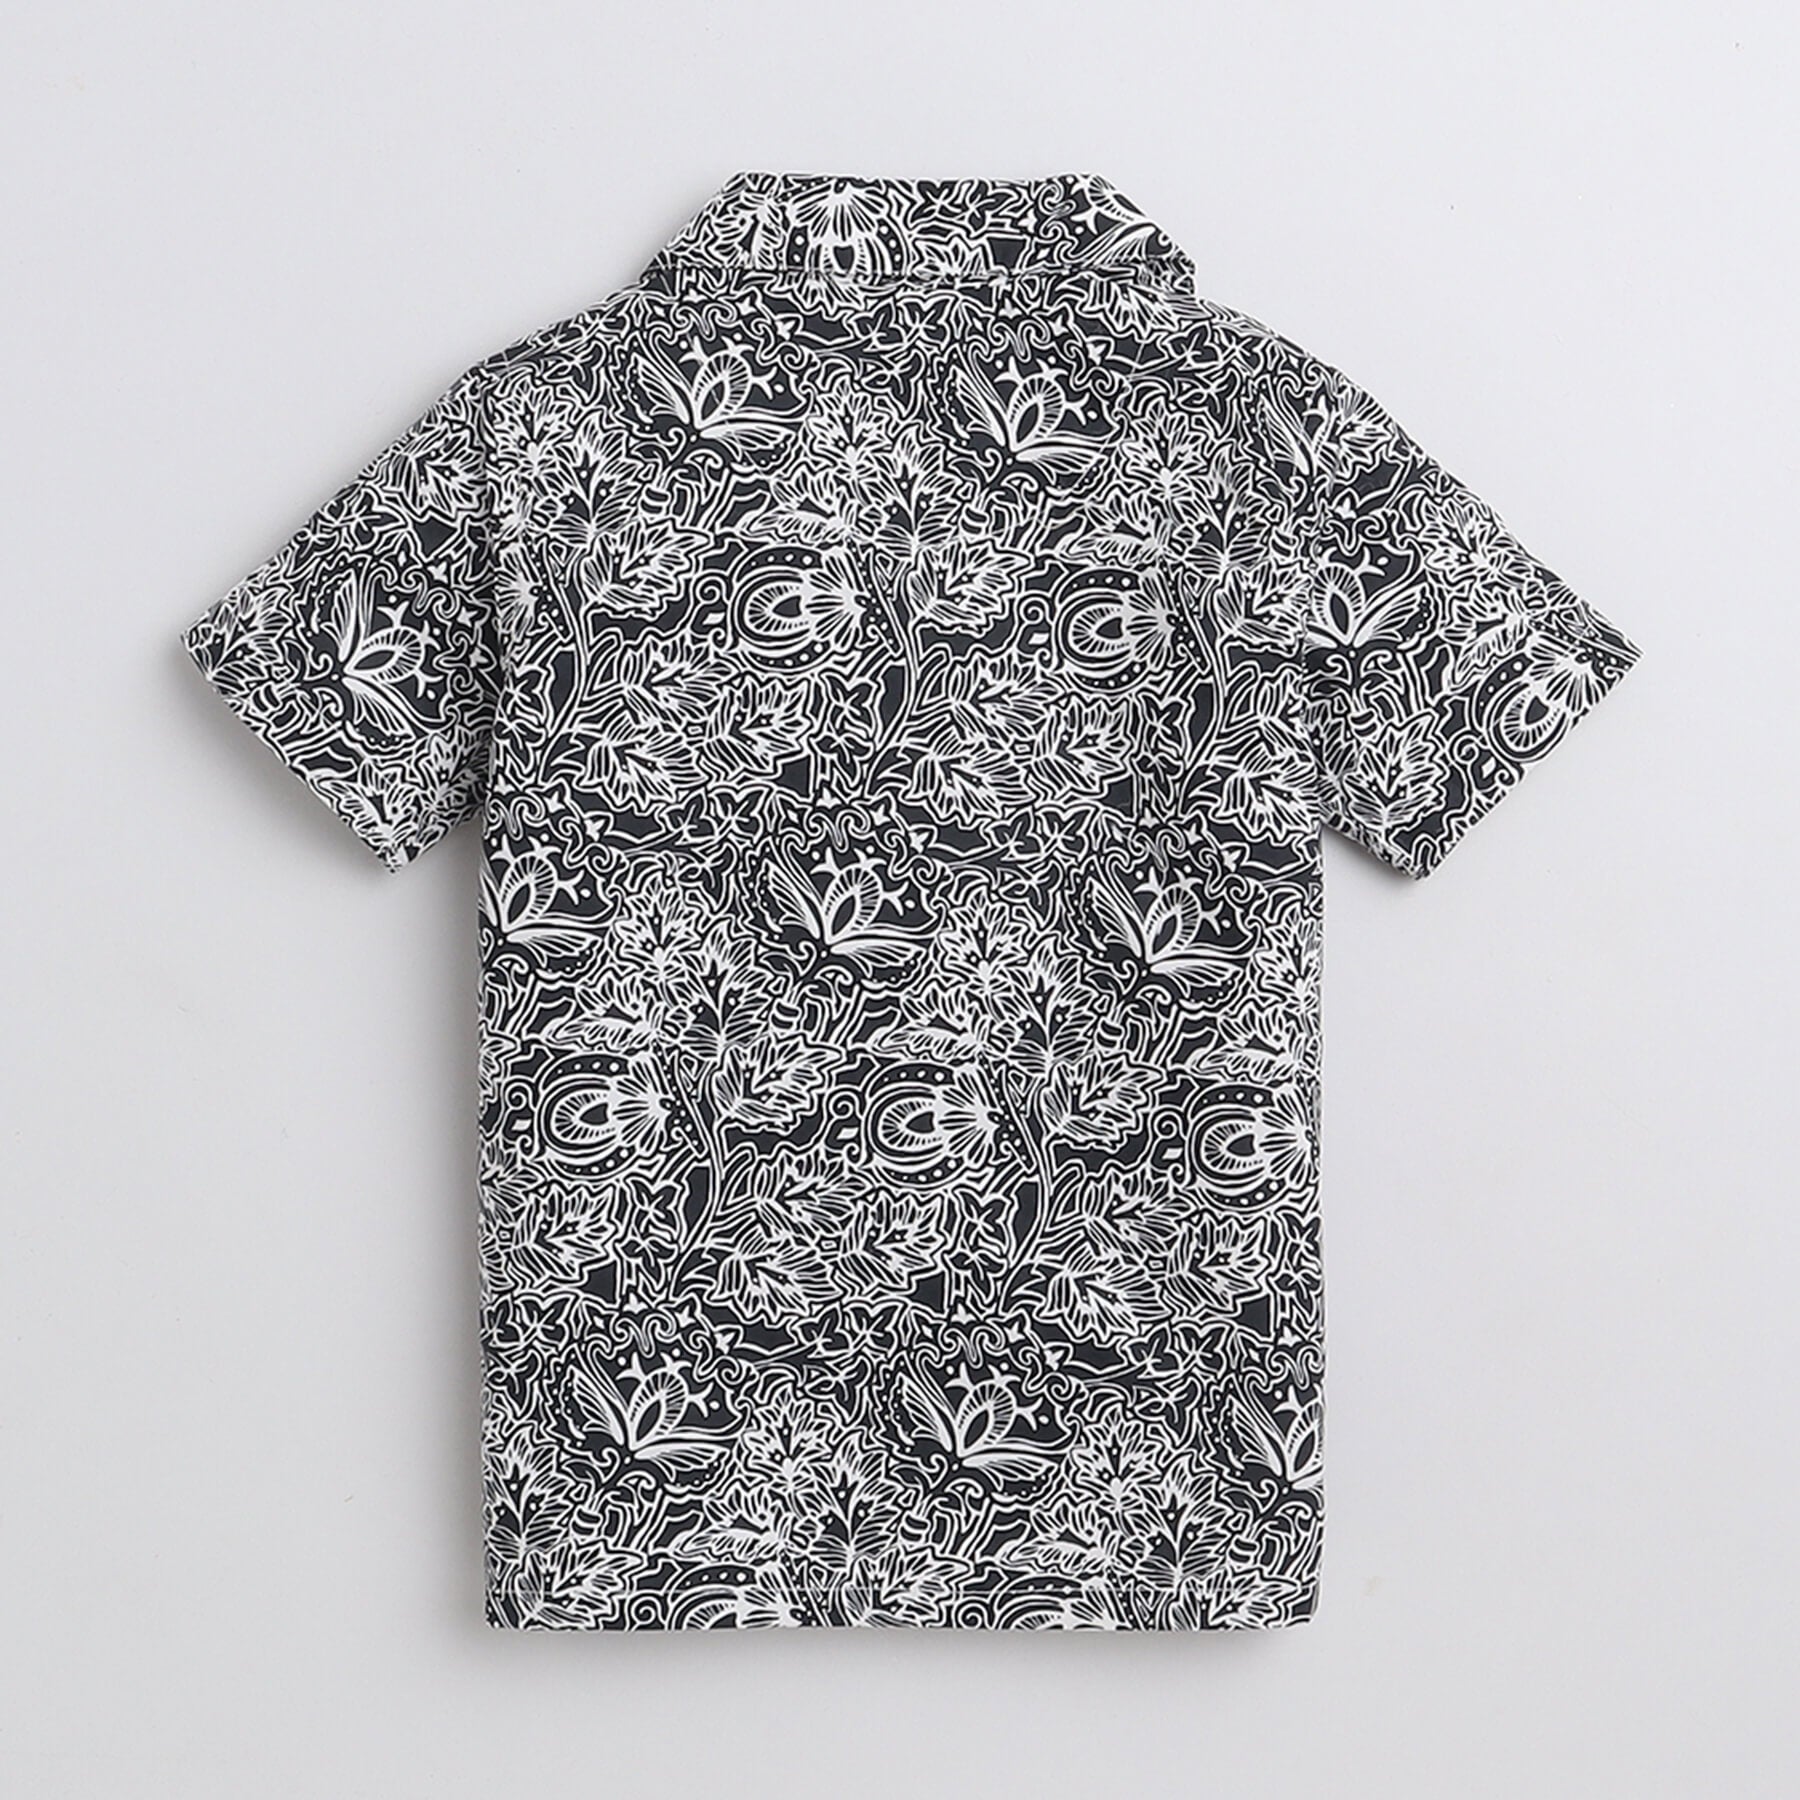 Taffykids floral printed half sleeves shirt and shorts set - Black/White